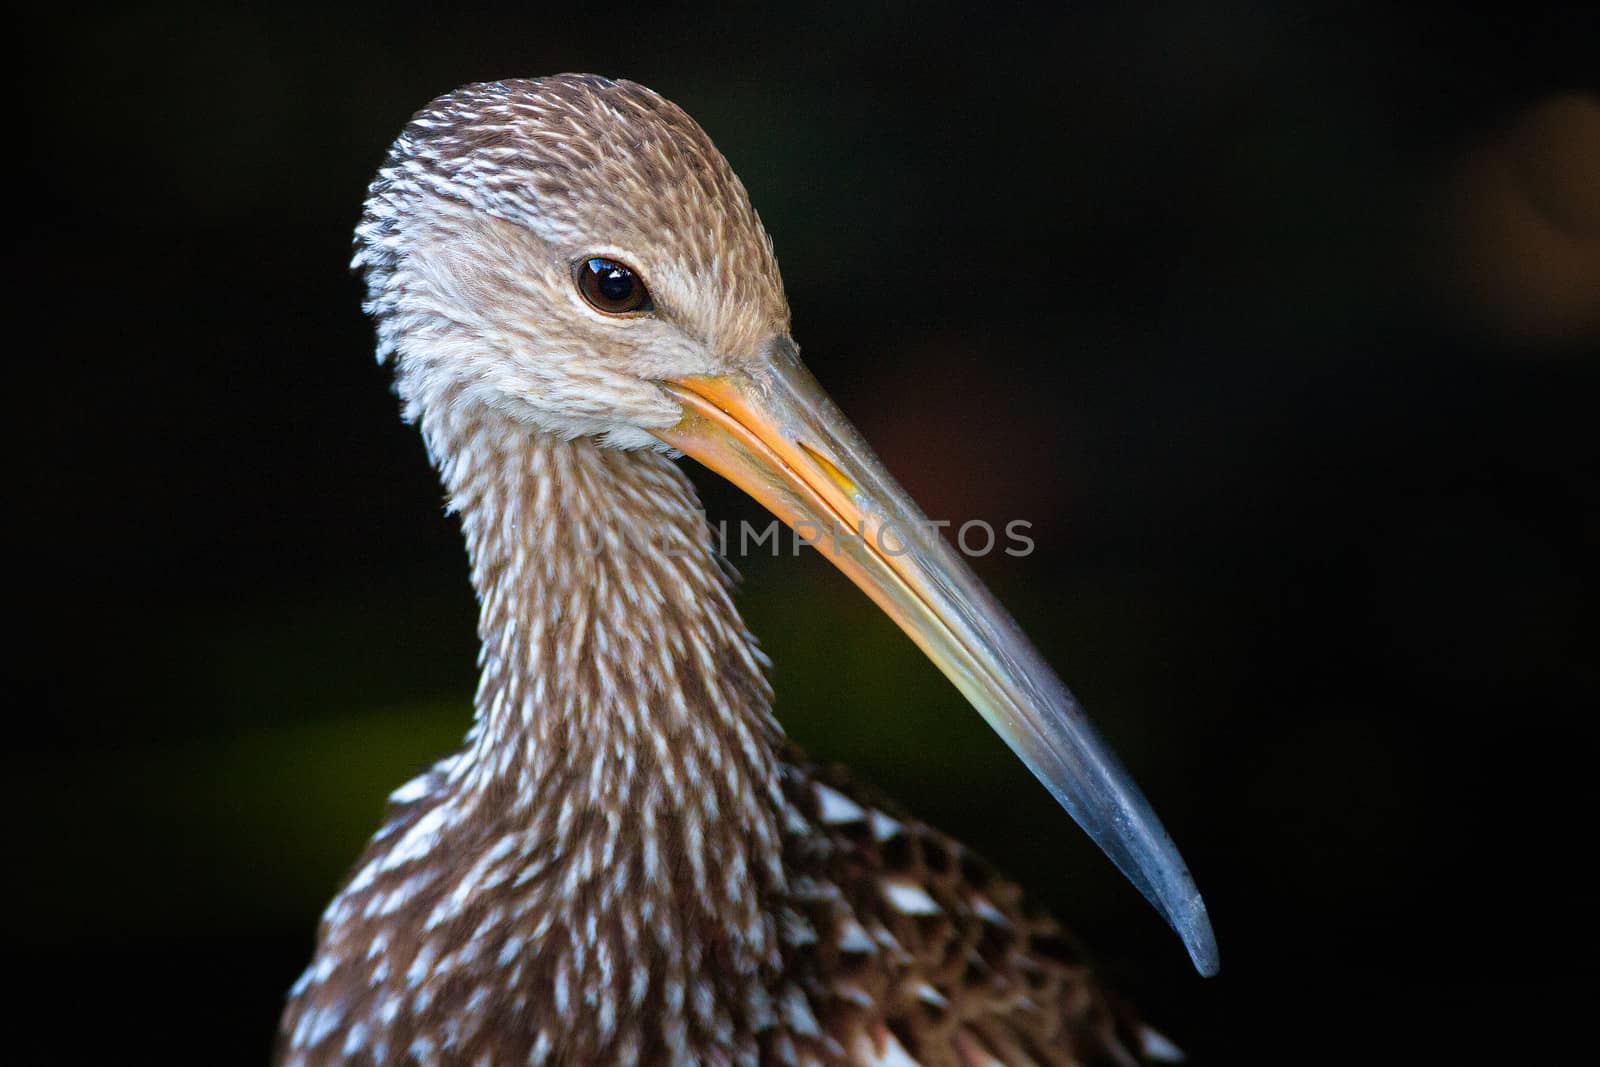 Portrait of bird with long beak or bill, black background.